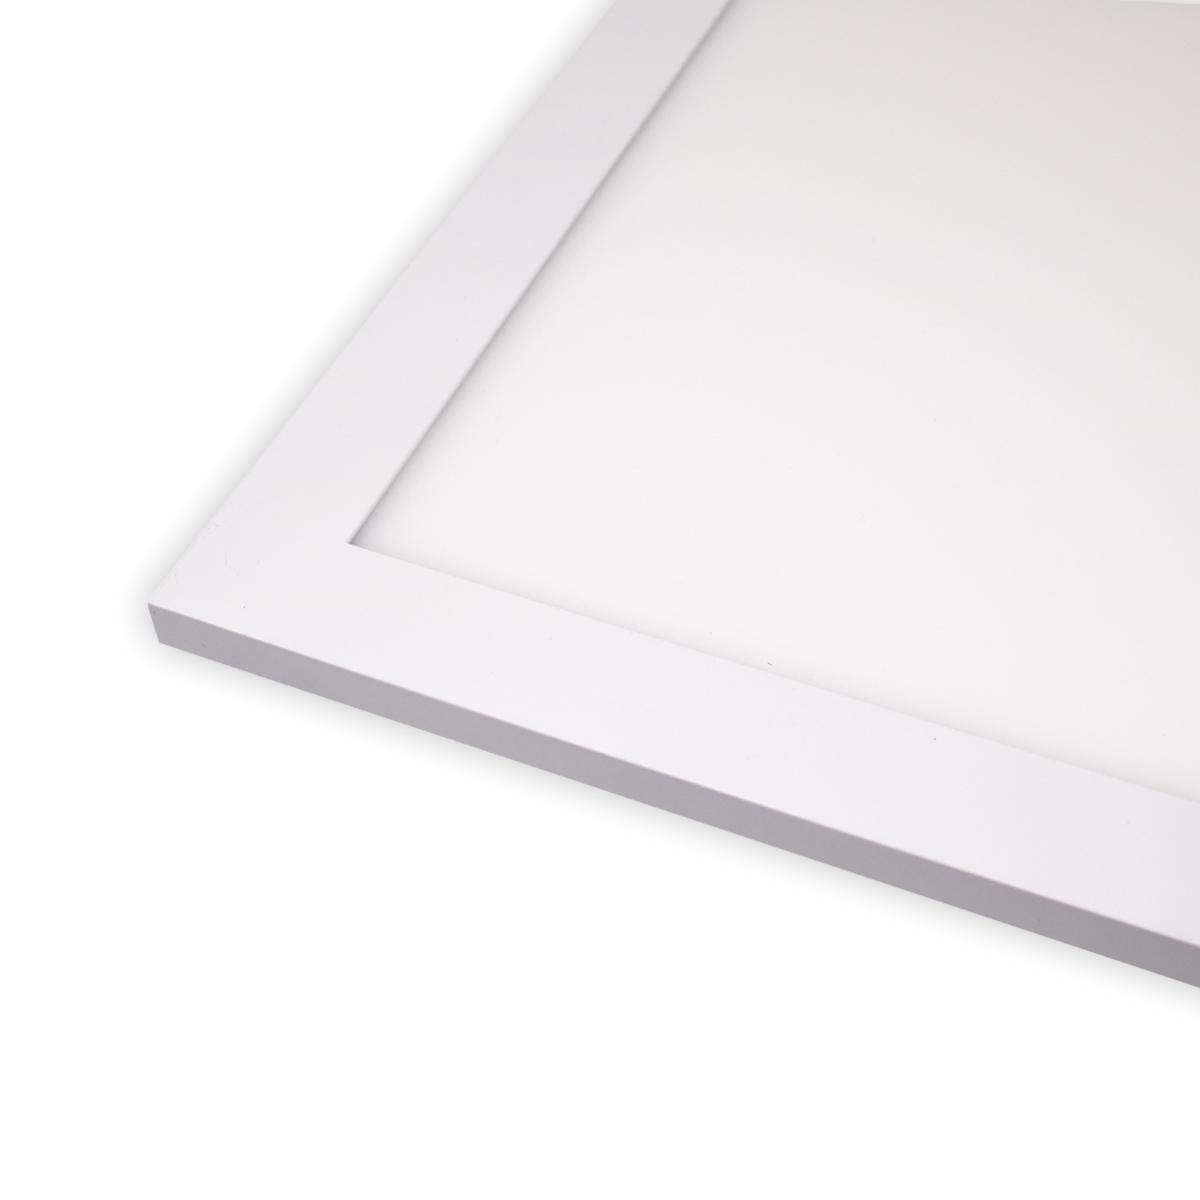 RGB+CCT LED Panel 60x60cm inkl. MiBoxer Smarthomesteuerung 48W 24V Rahmen weiß - Panelmontage: Ohne Montagezubehör